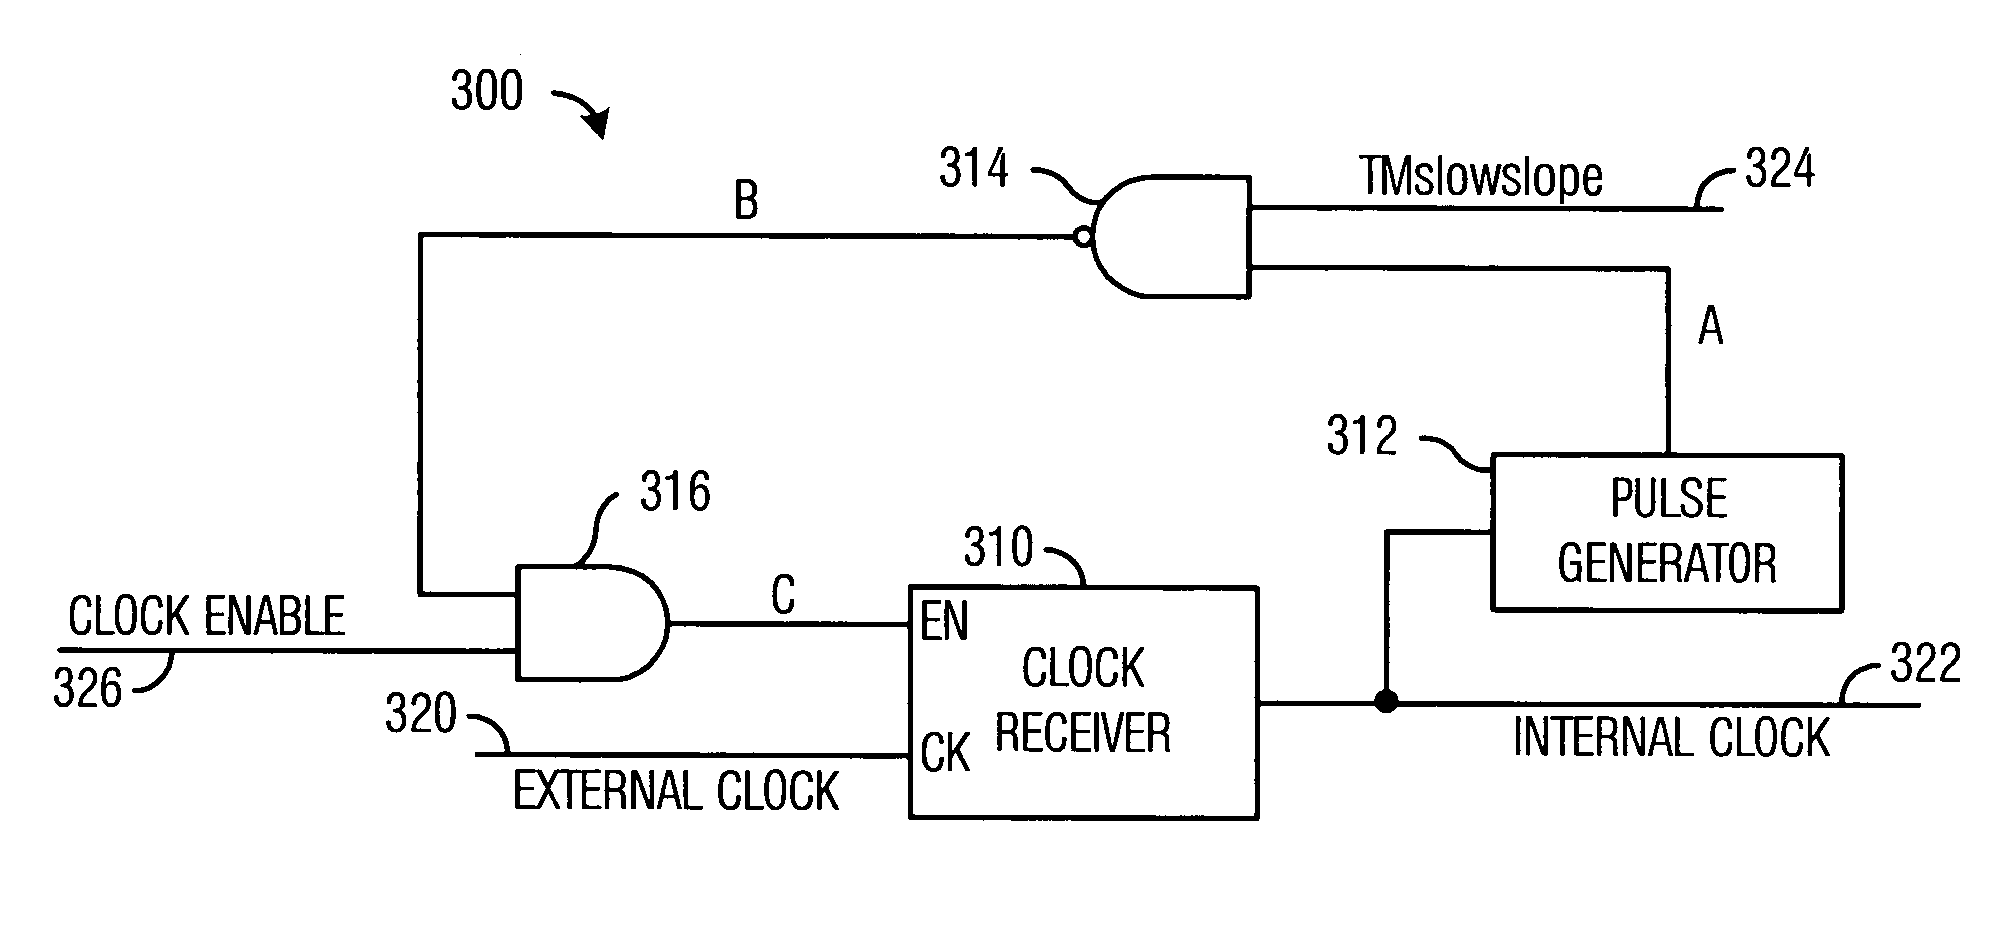 Noisy clock test method and apparatus